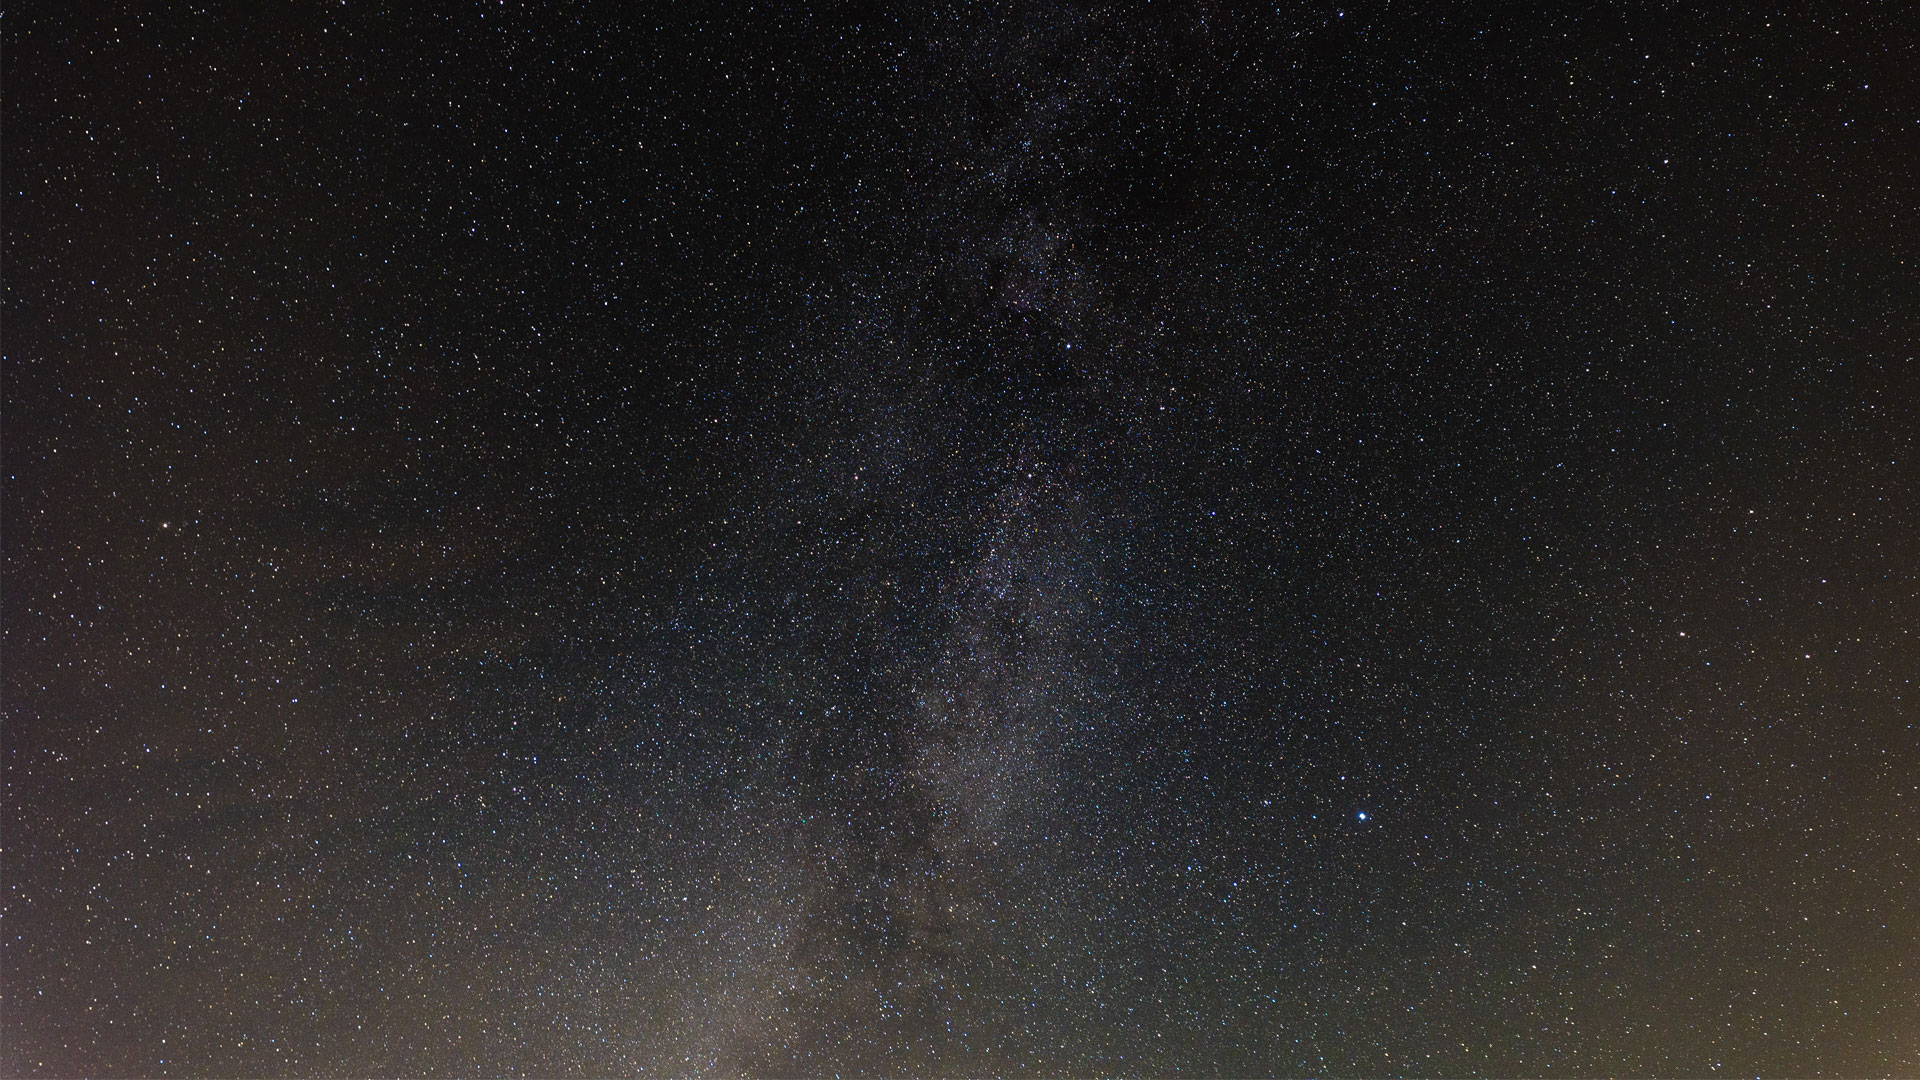 Sigma 14-24mm F2.8 DG HSM ART lens review: image shows night sky